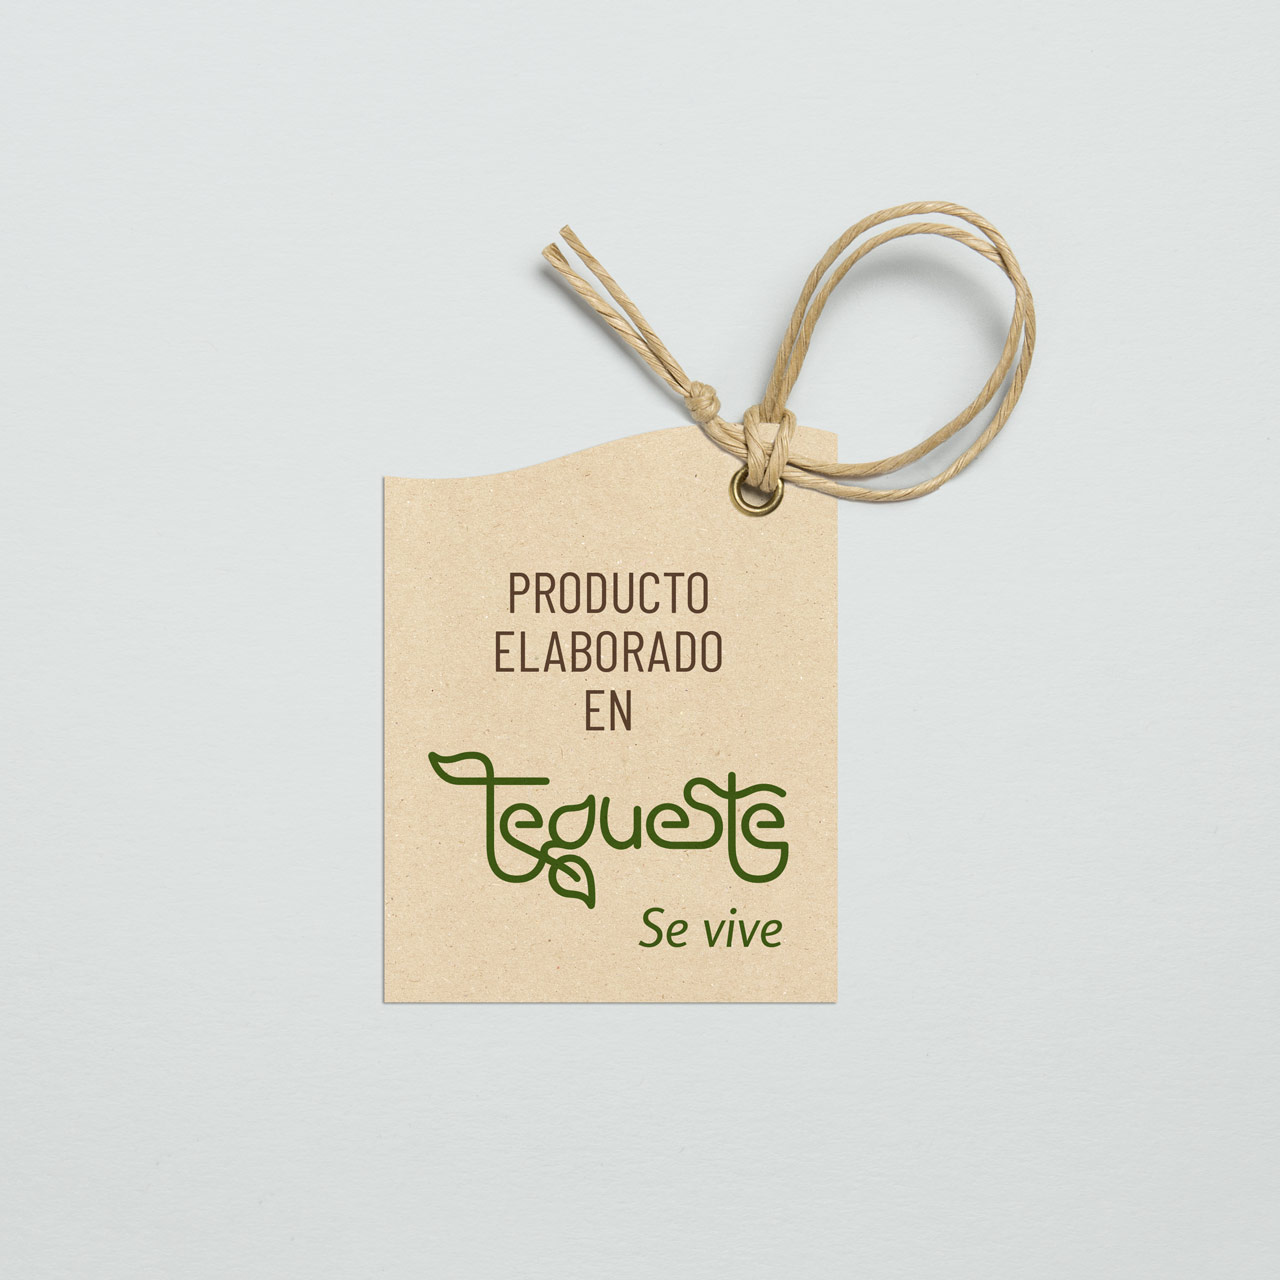 Etiqueta de producto con marca territorio Tegueste.